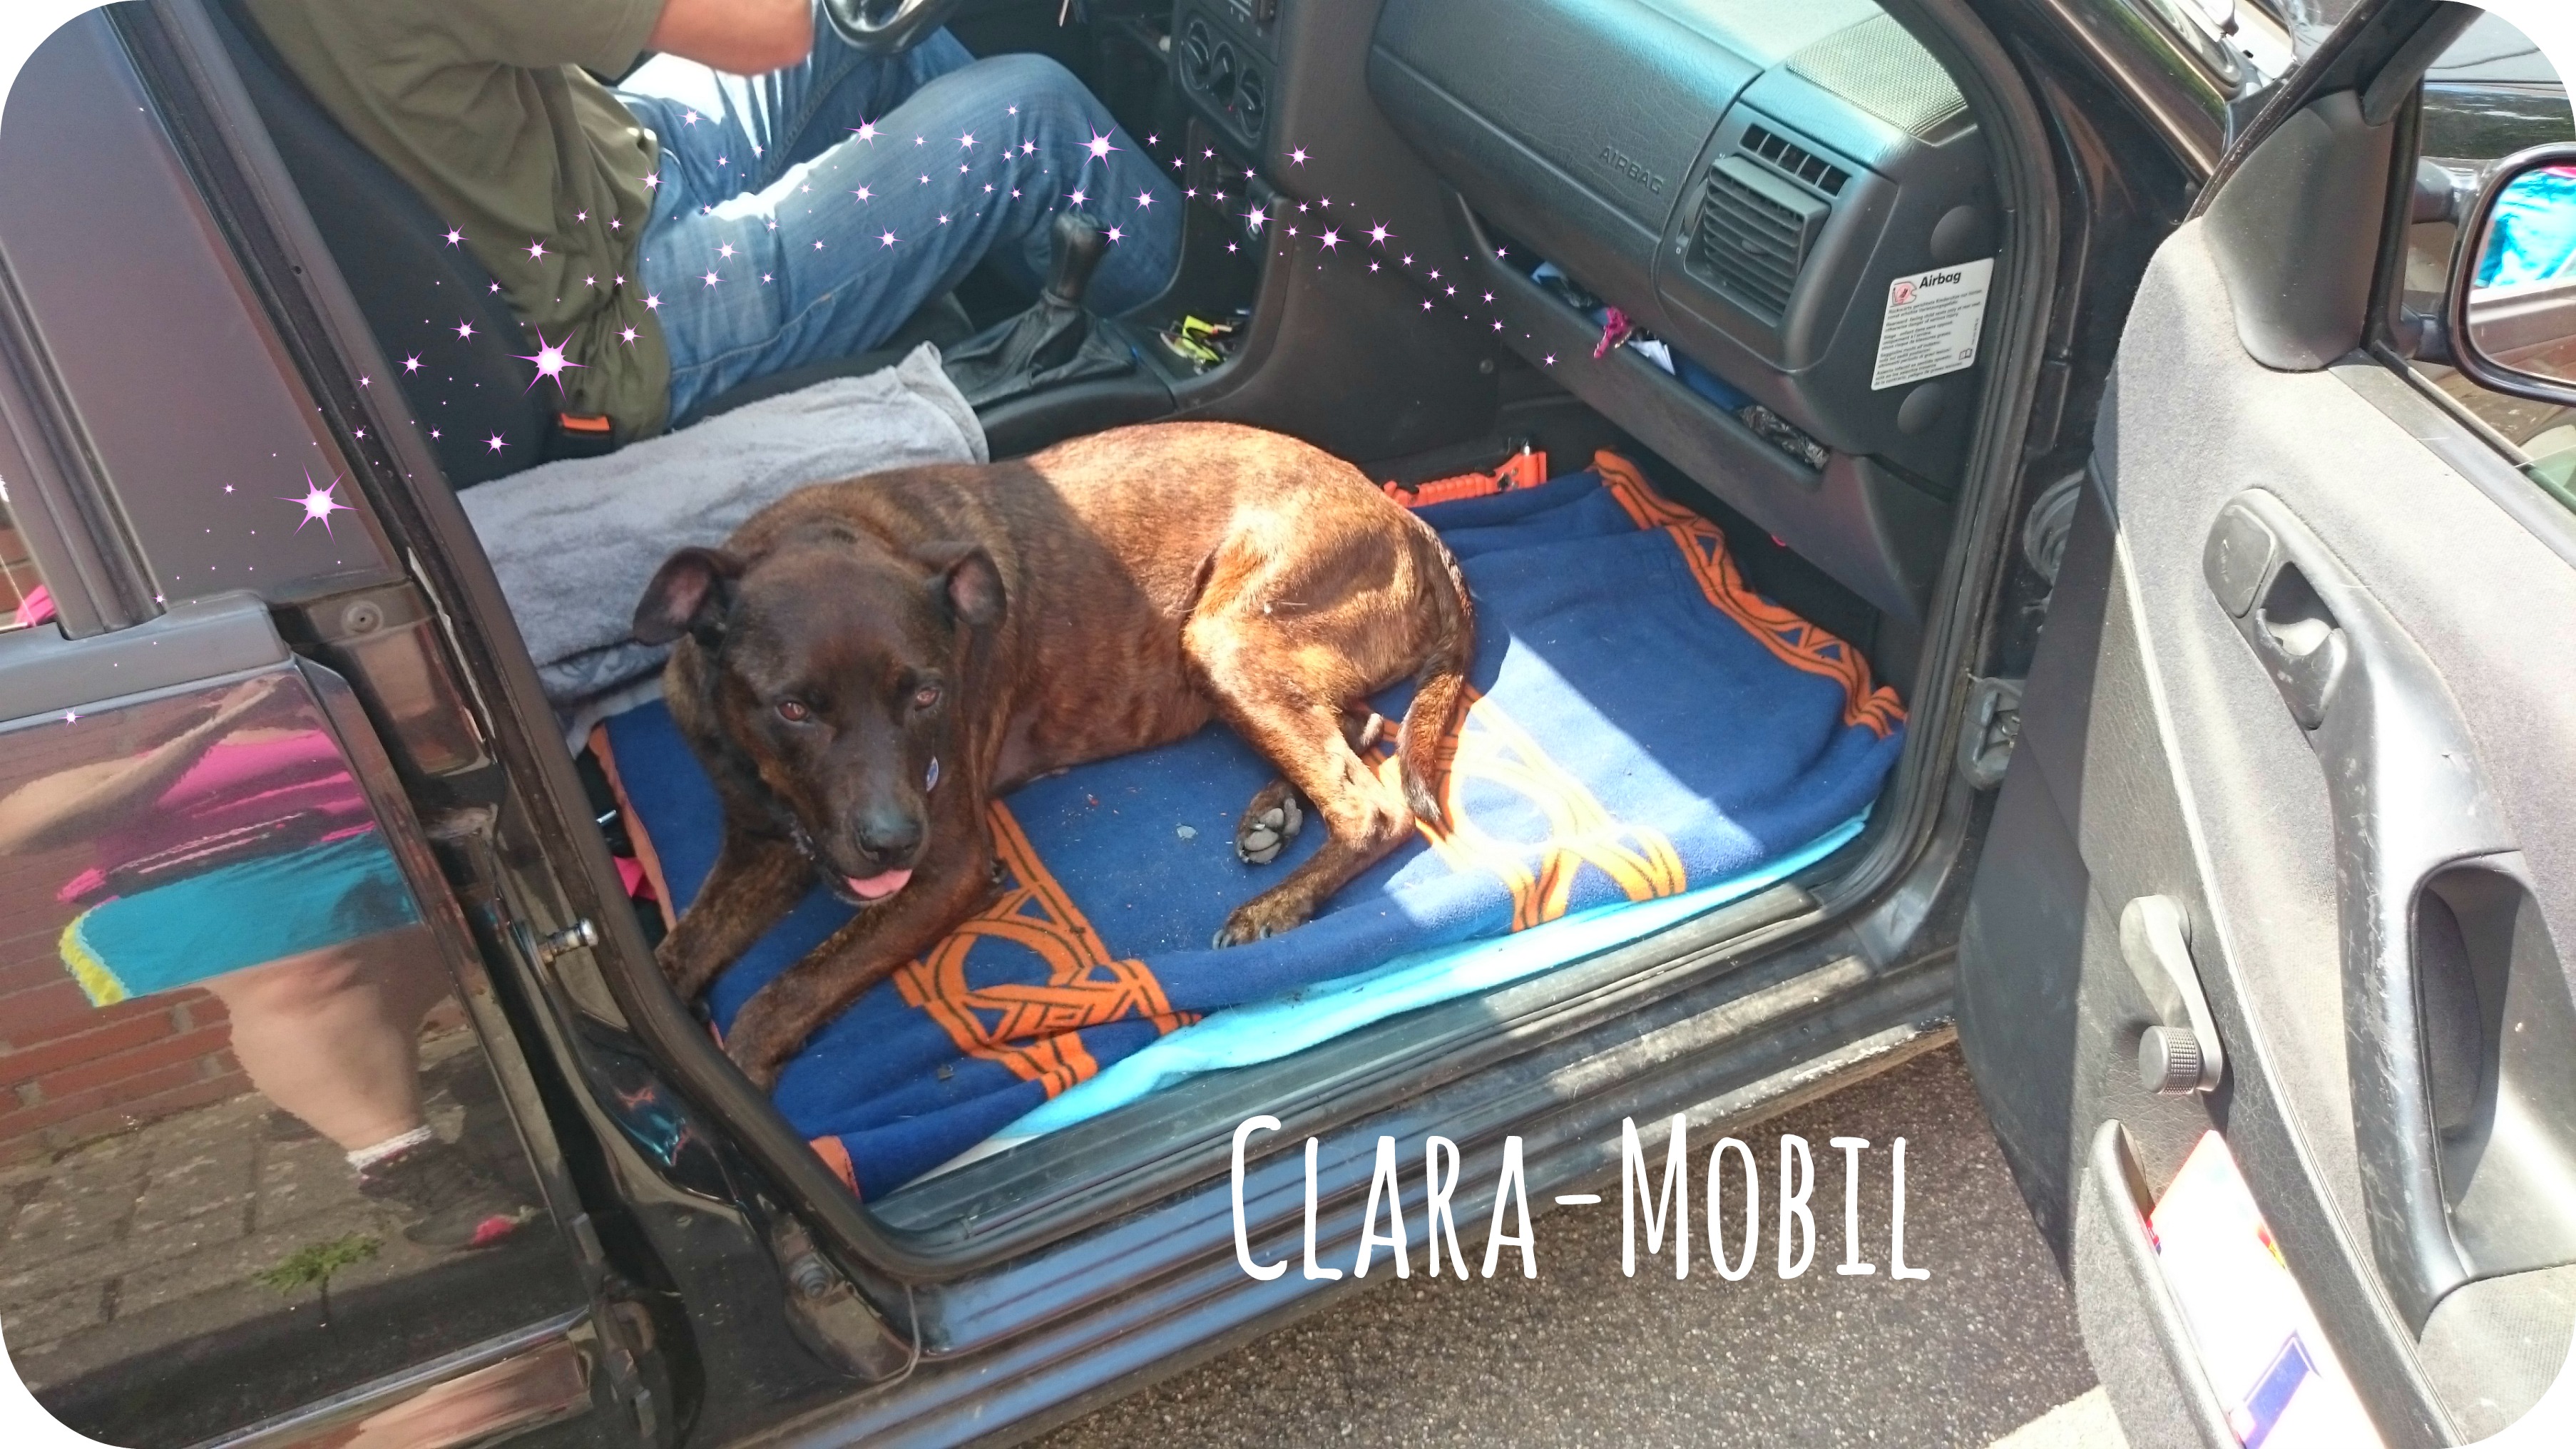 Clara mobil